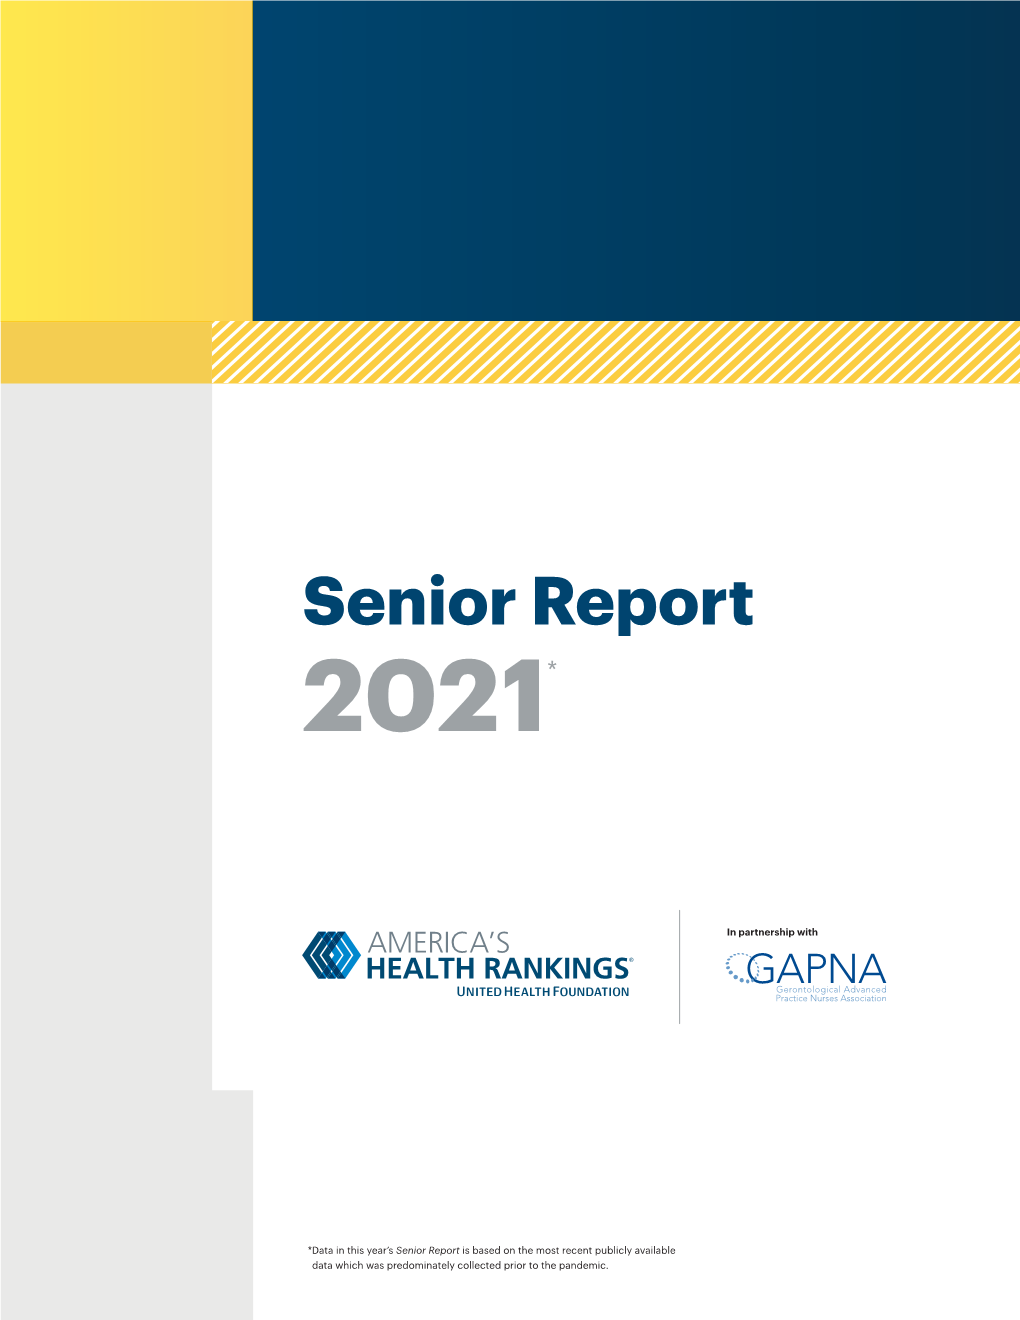 America's Health Rankings Senior Report 2021